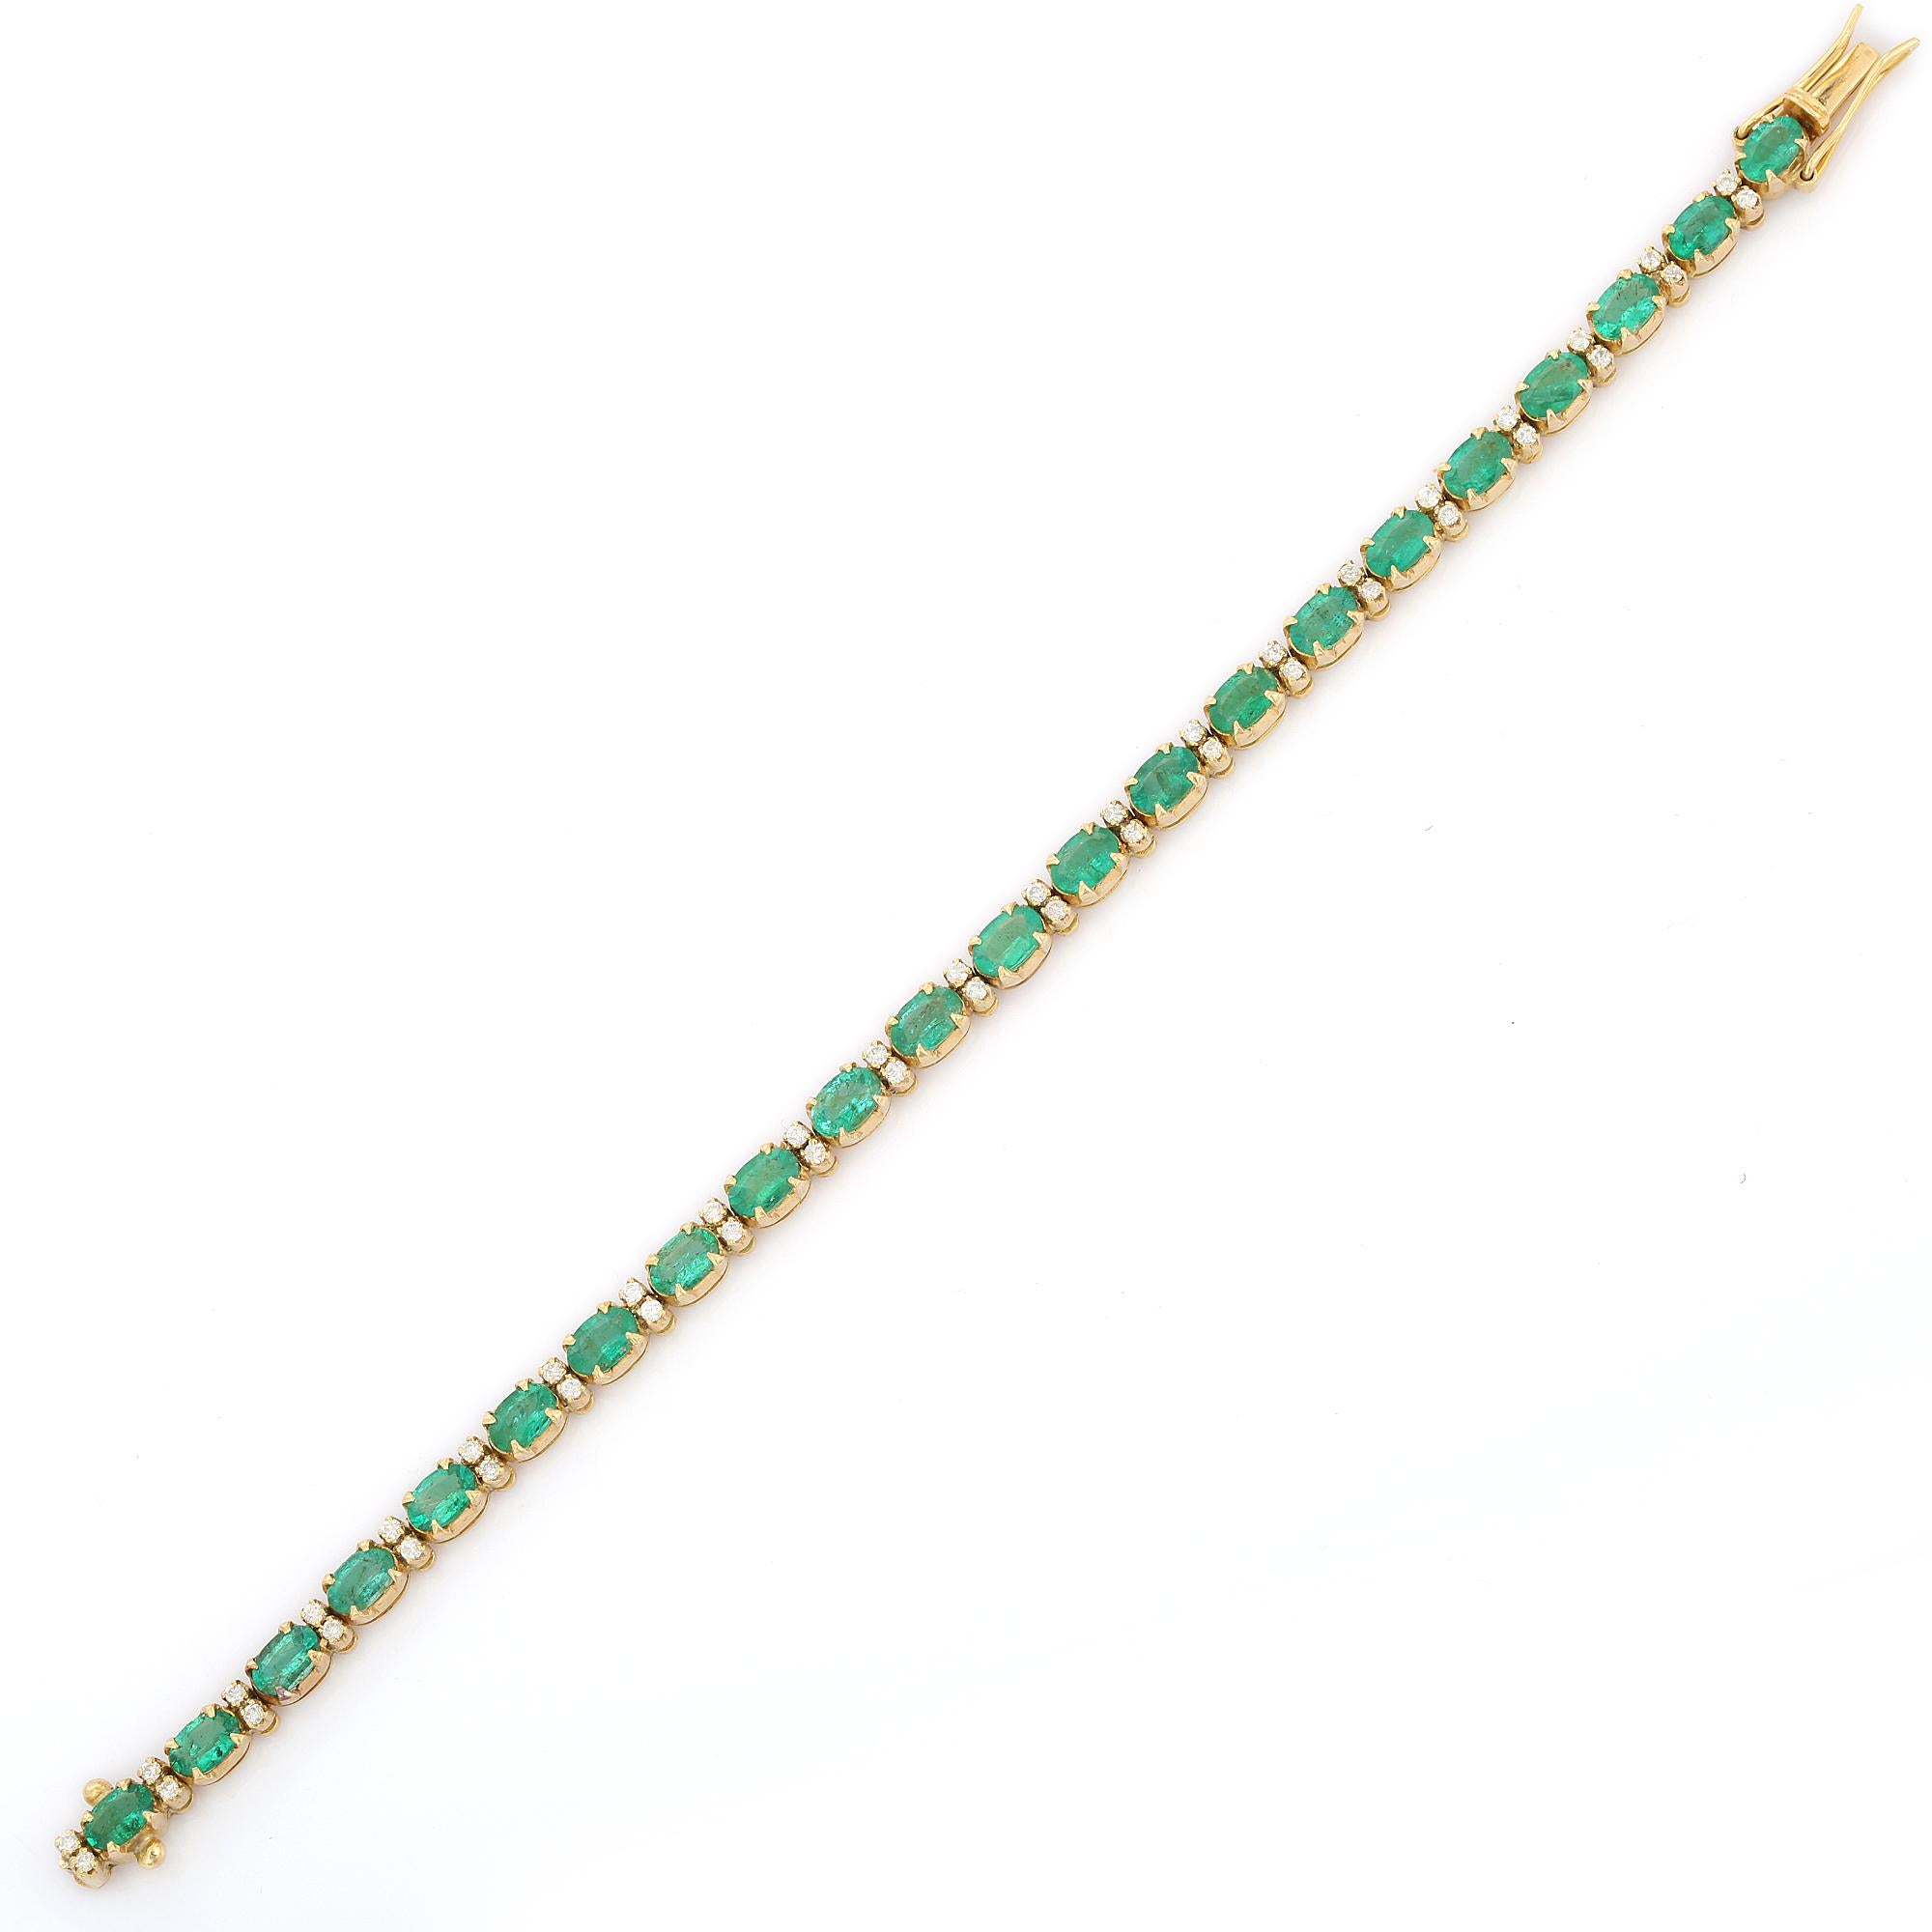 8.1 Carat Emerald Gem Line Tennis Bracelet in 18K Yellow Gold With Diamonds  For Sale 1